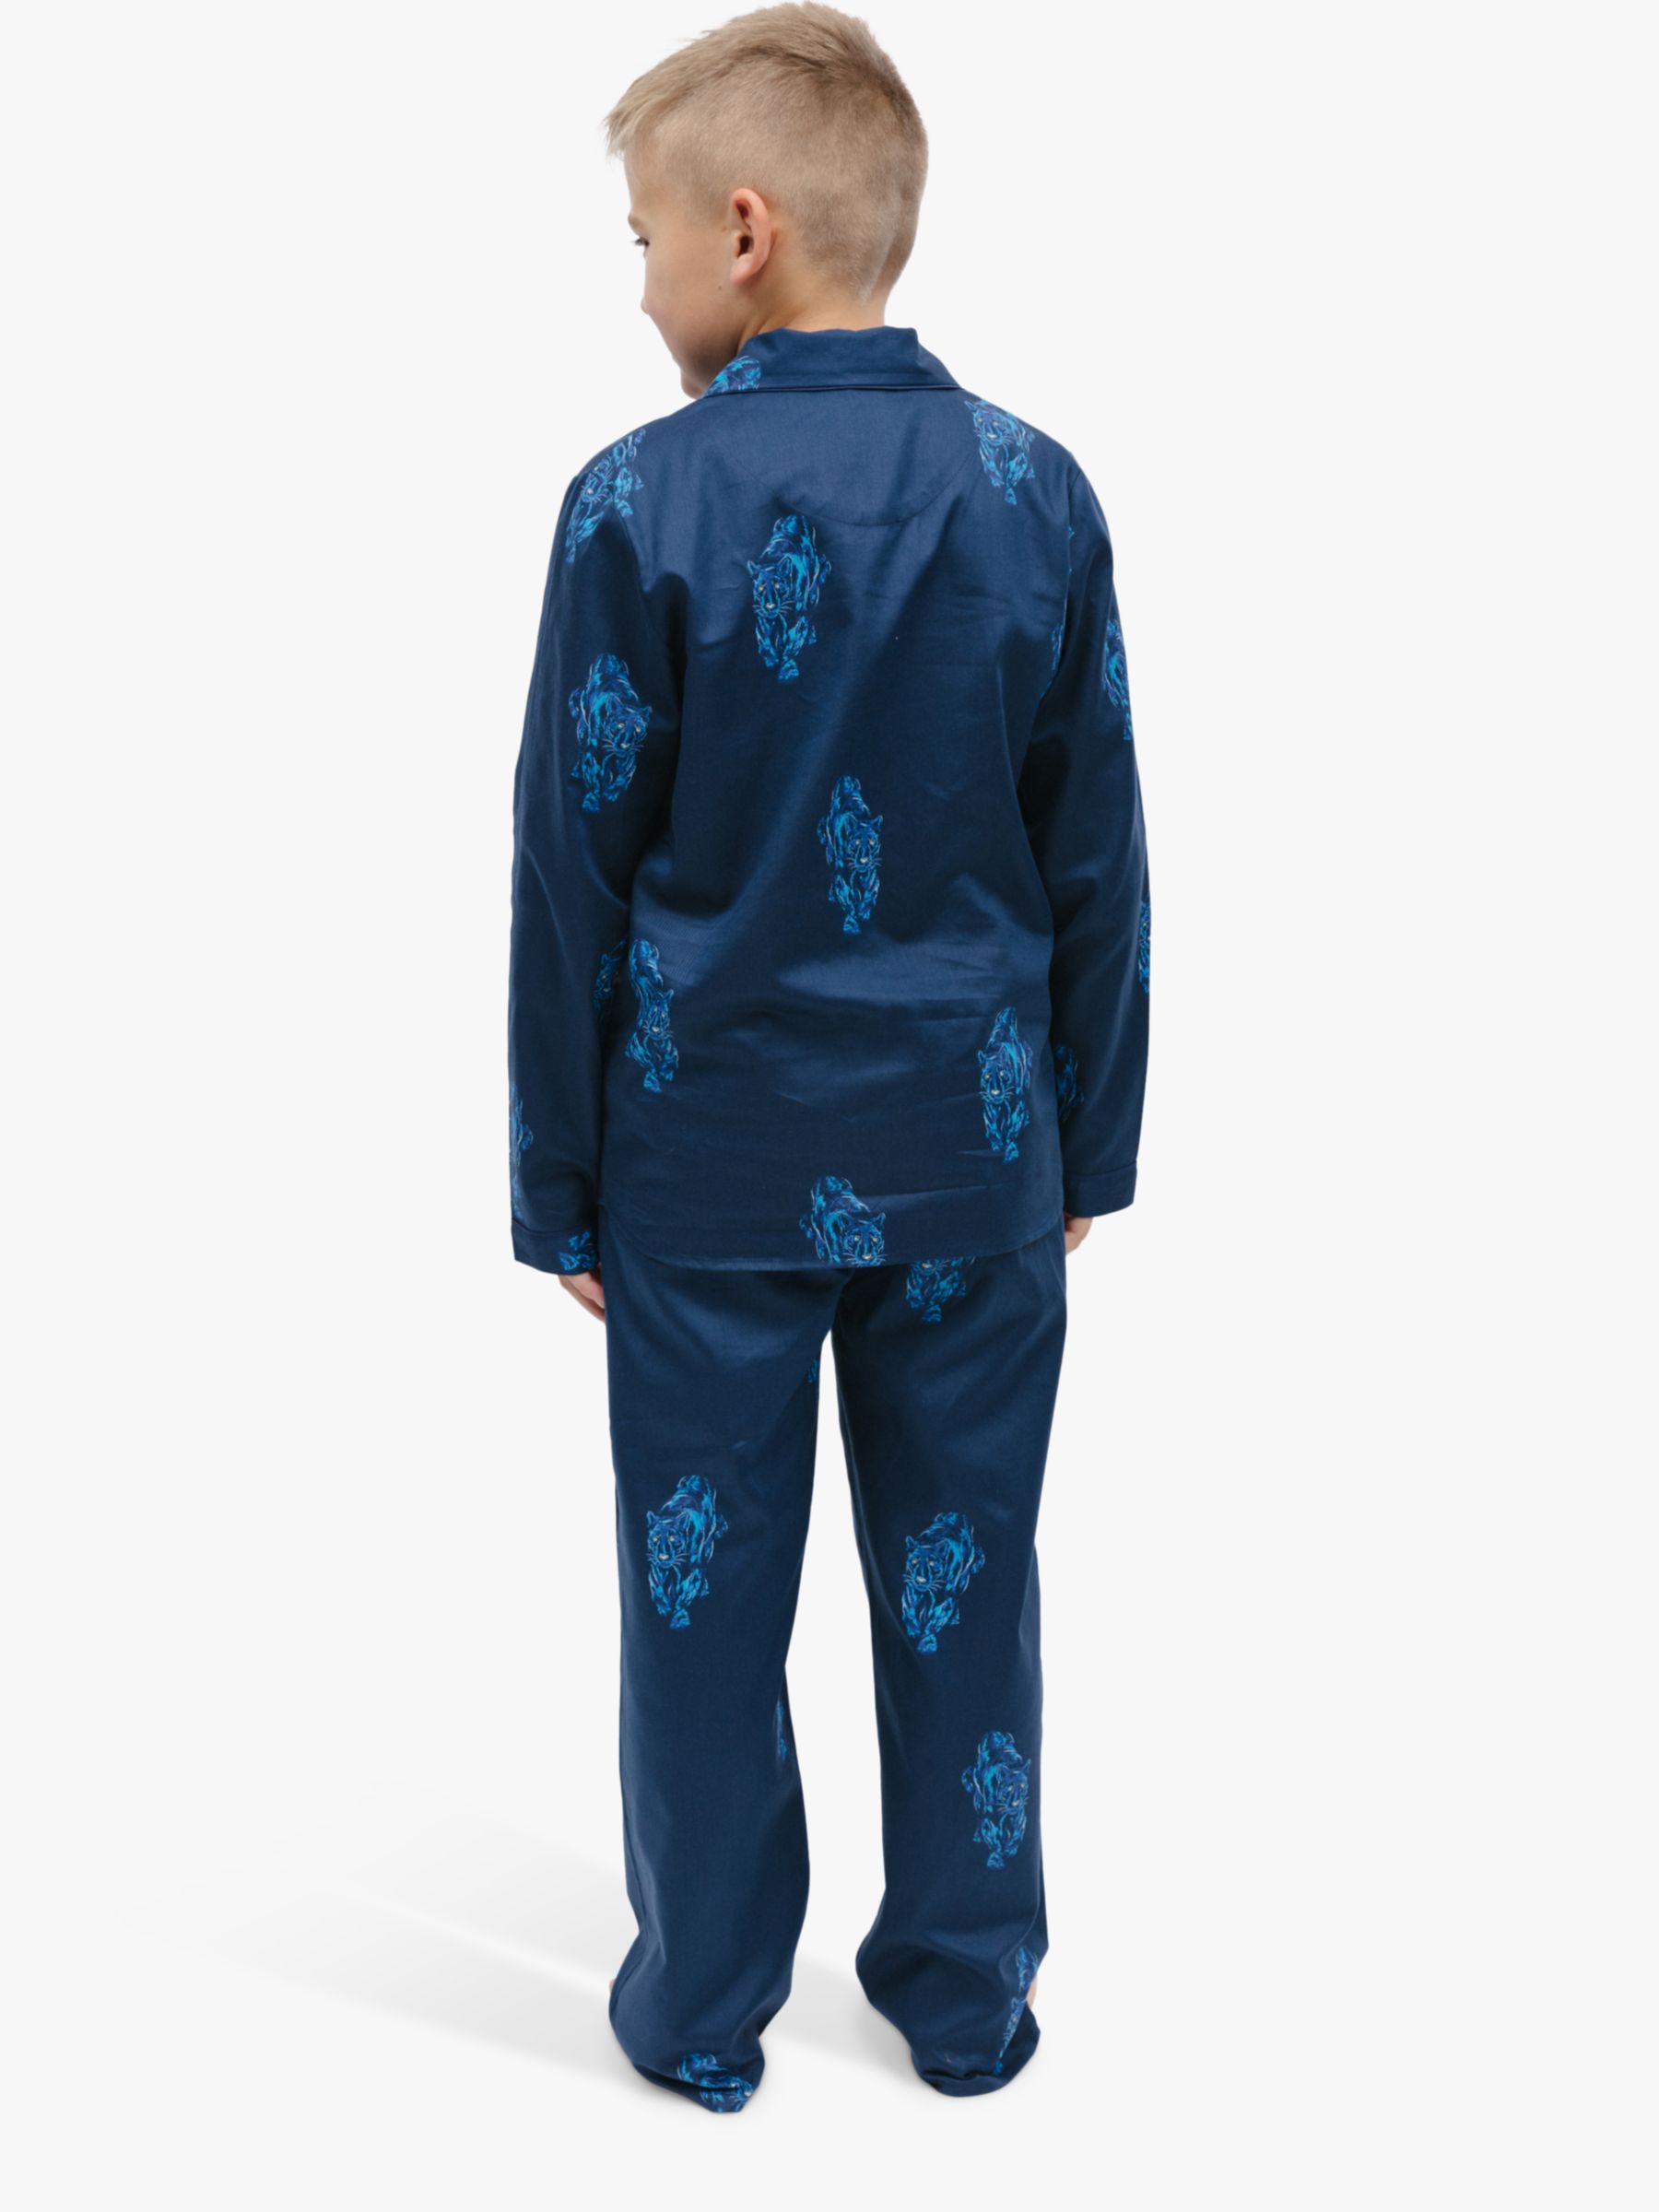 Minijammies Kids' Felix Panther Print Pyjamas, Dark Blue, 2-3 years